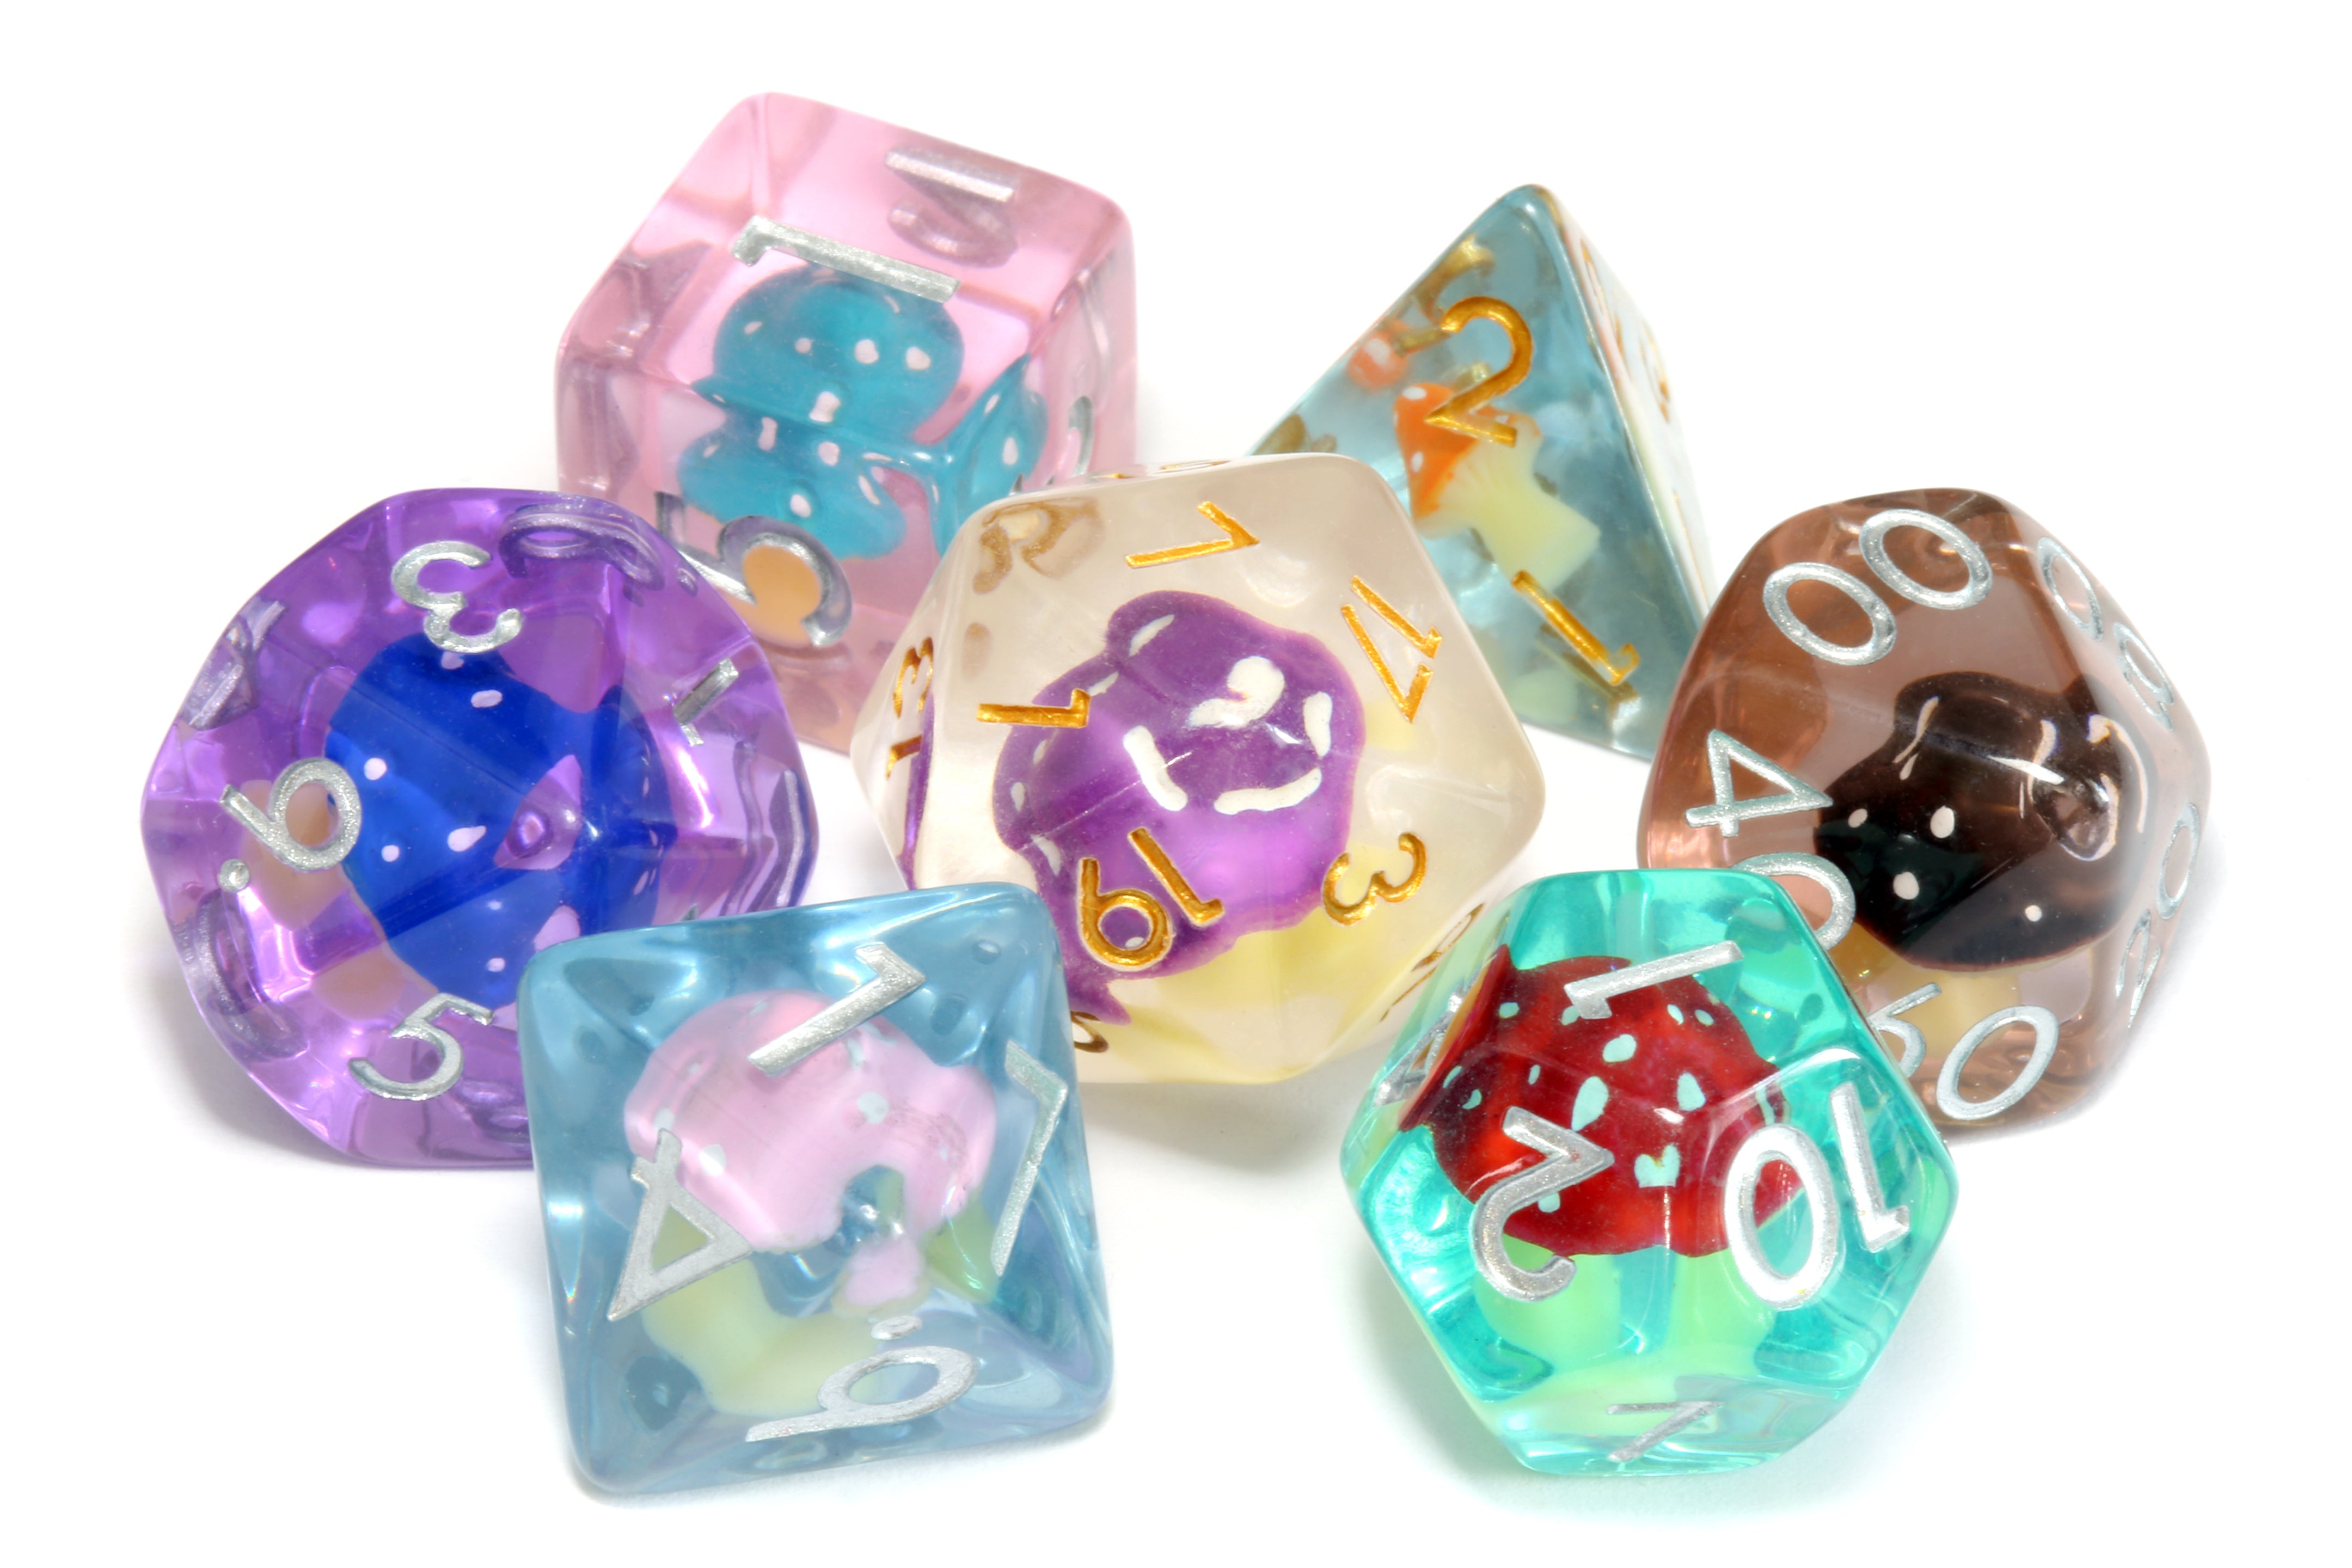 Mushroom Party Mix dice set - Multicolor Mushroom dice - The Wizard's Vault